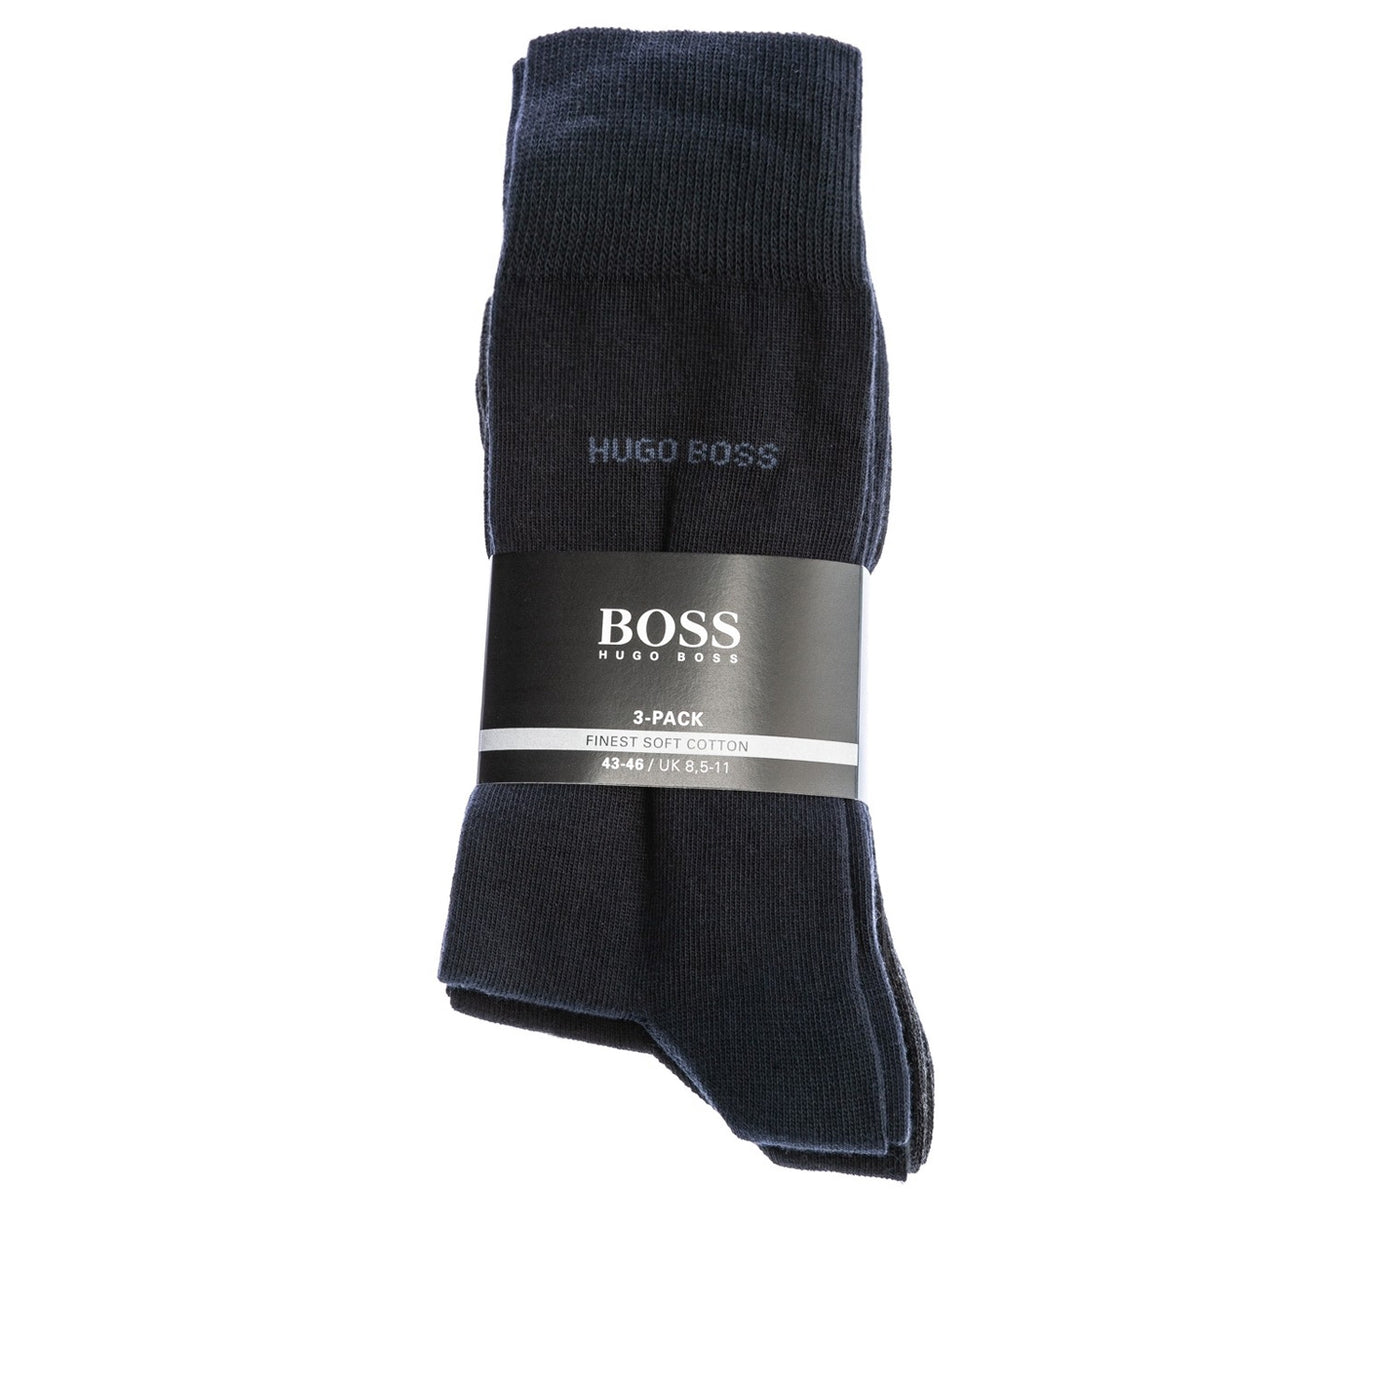 BOSS 3 Pack RS Uni Sock in Black, Grey & Navy